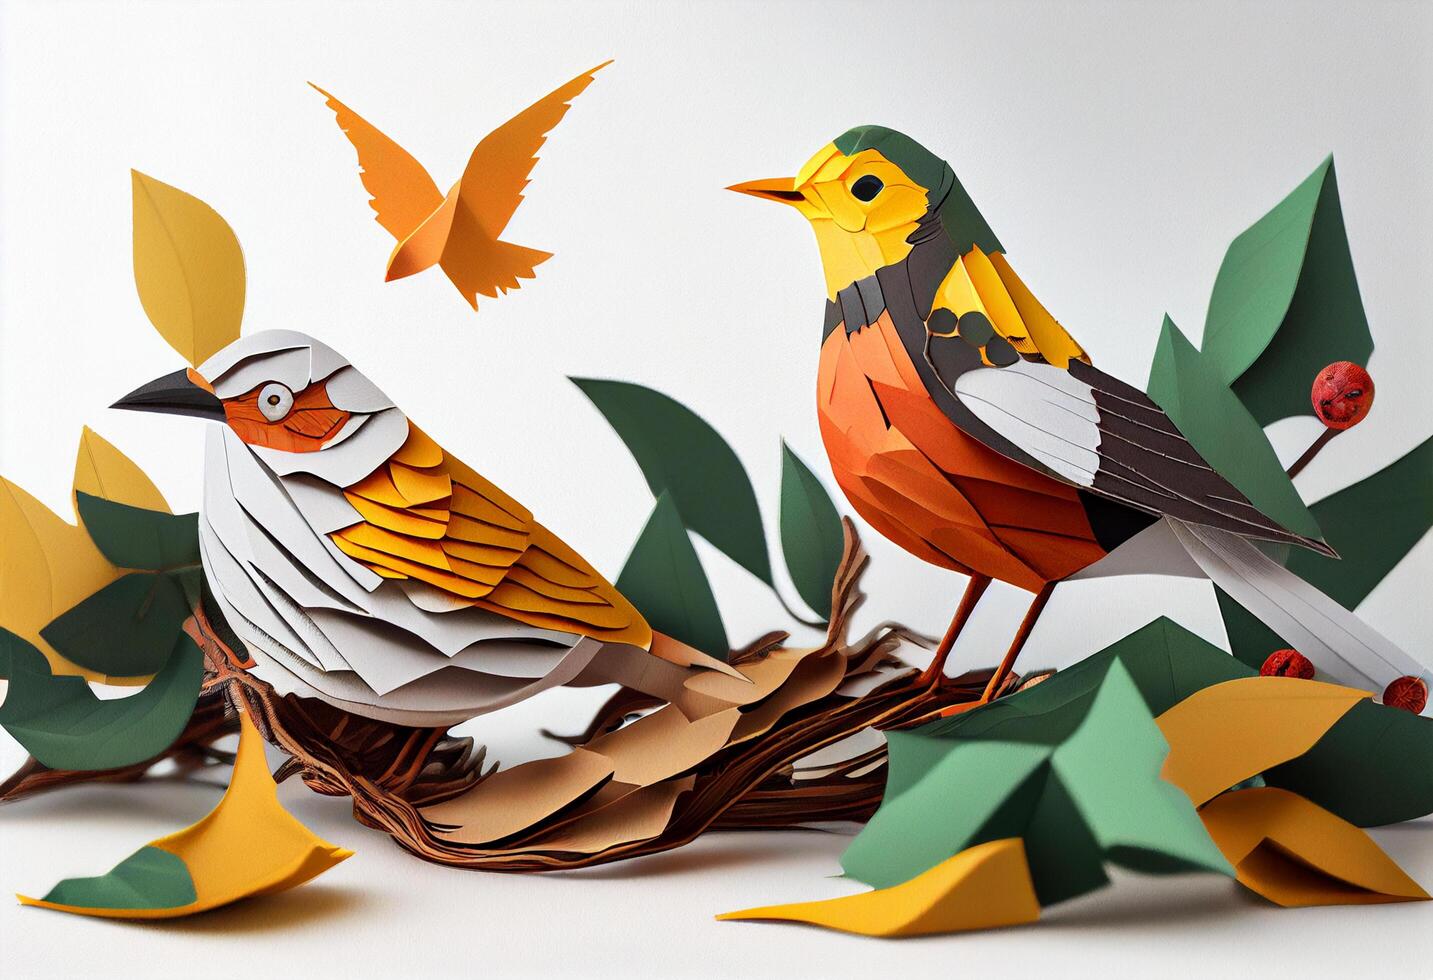 Colorful paper art birds illustration photo